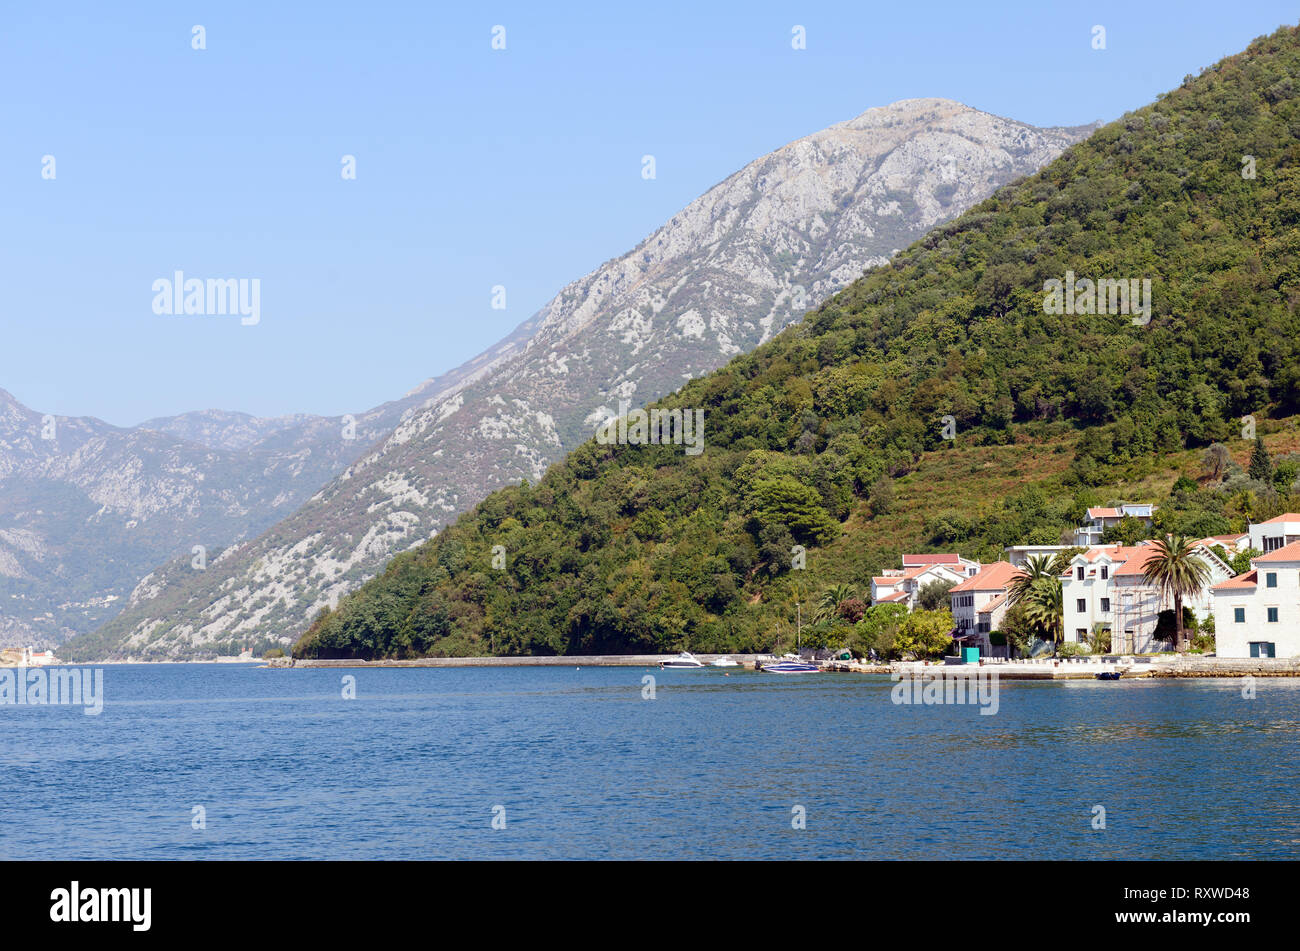 Balkans, Adriatic sea, Europe. Travel destinations background Stock Photo